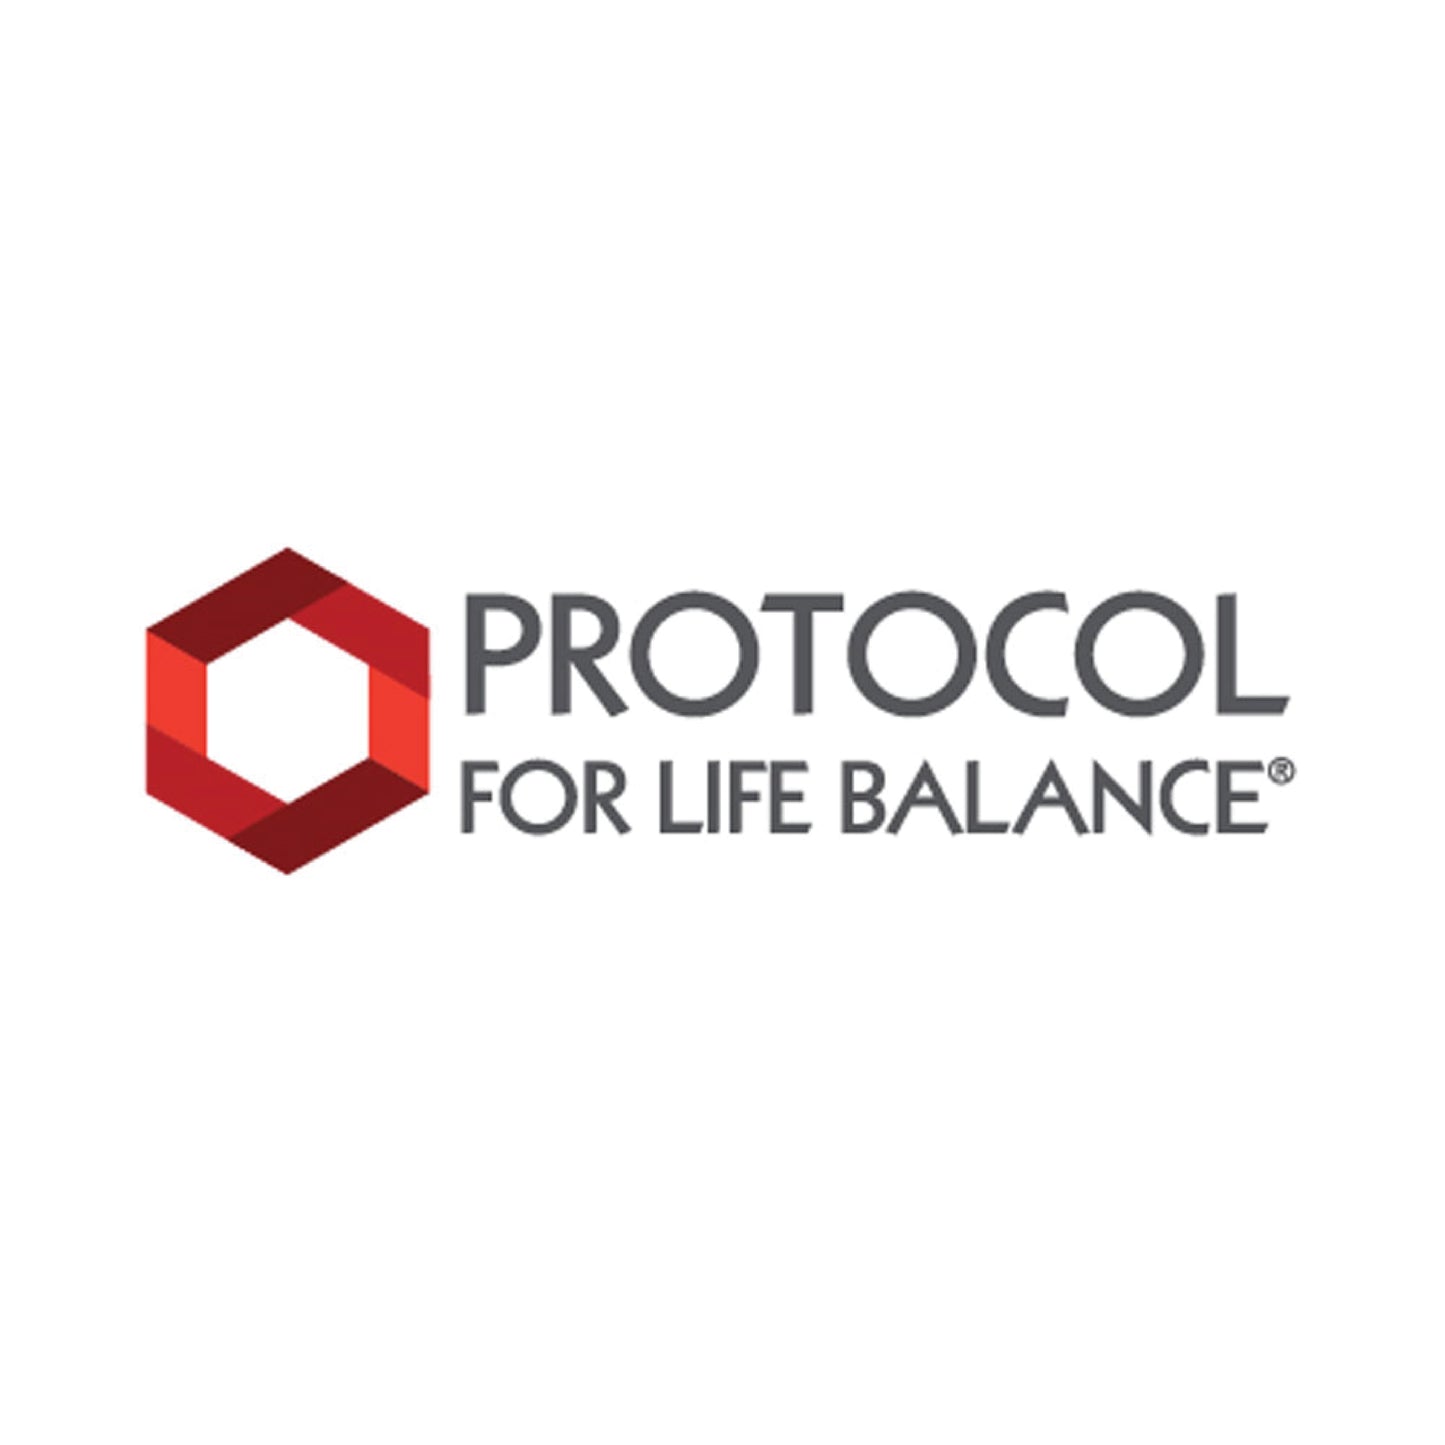 Protocol for Life Balance, Ginkgo Biloba, 120 mg, 100 Veg Capsules